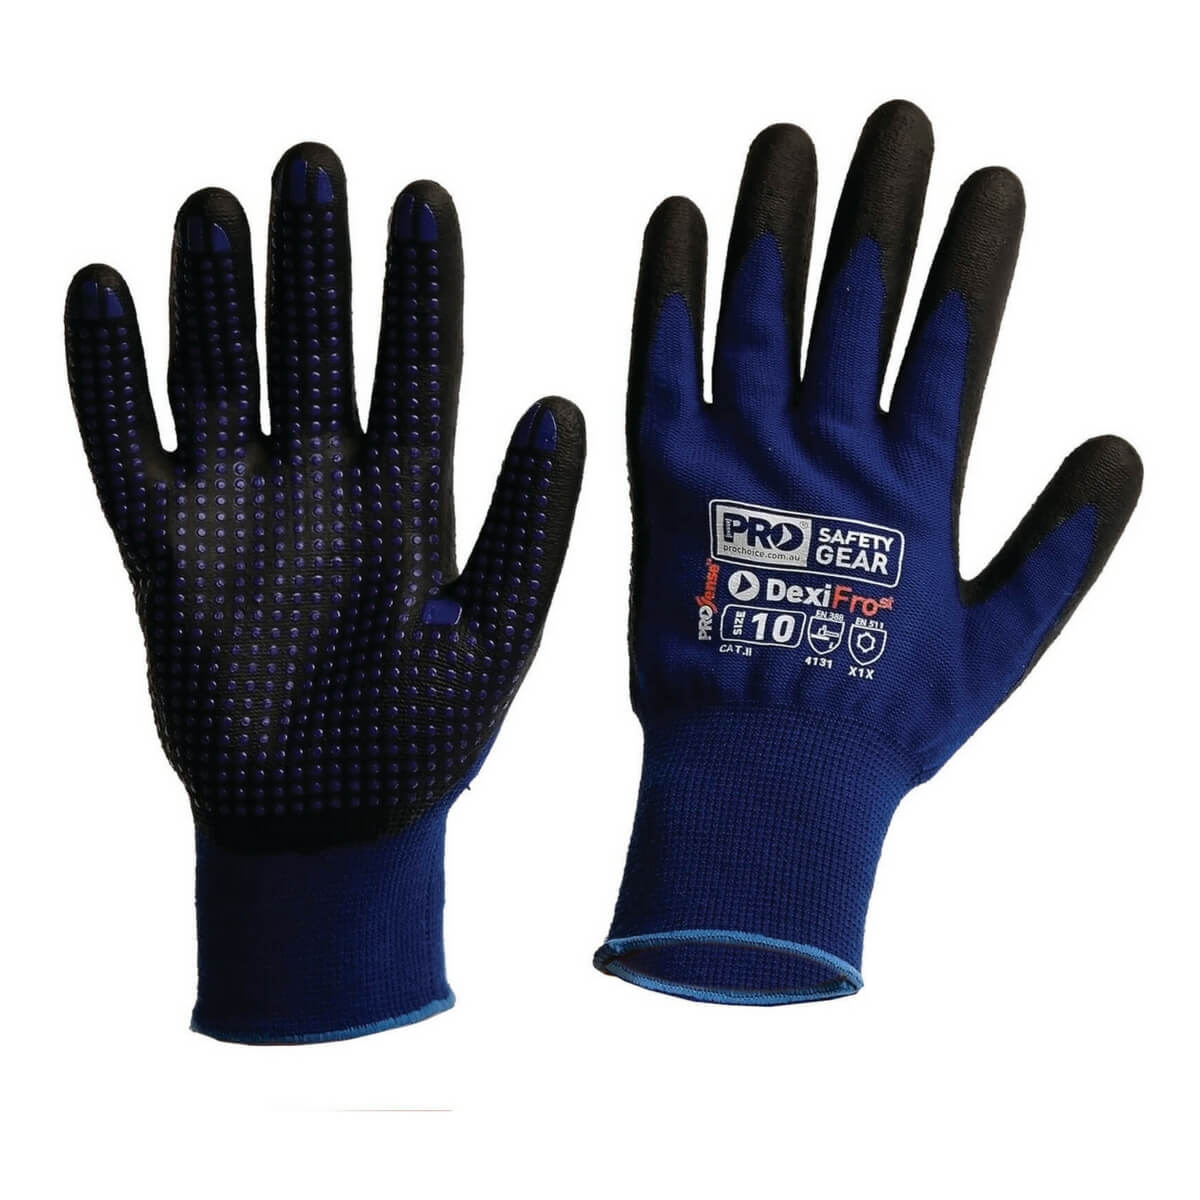 nitrile winter gloves